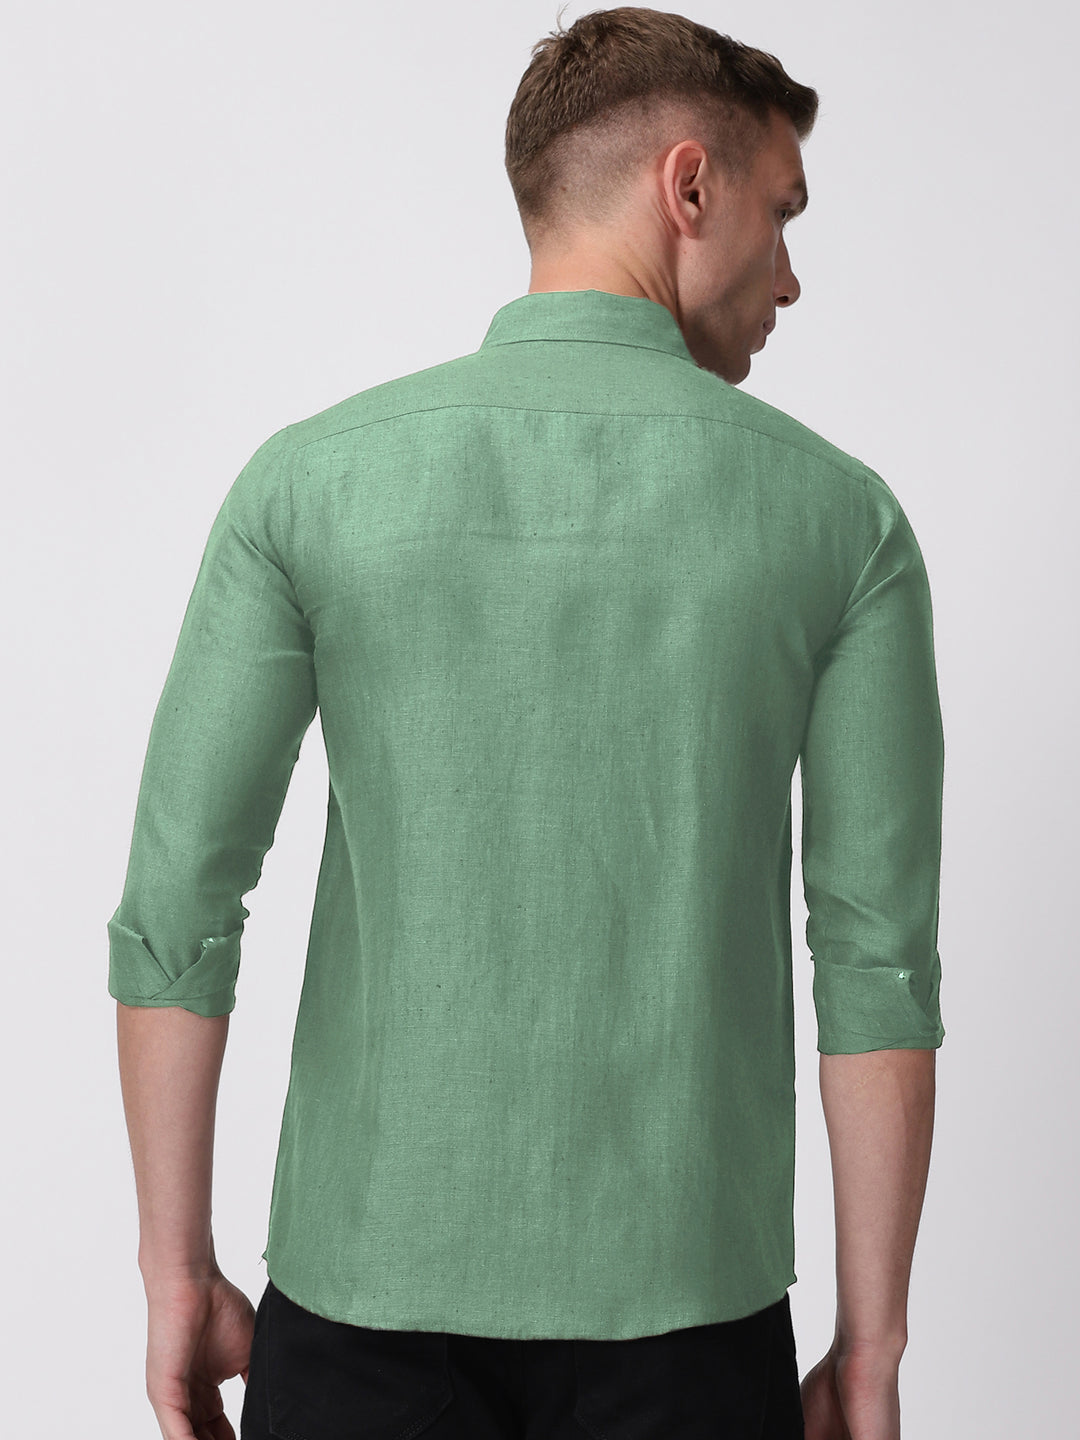 Harvey - Pure Linen Full Sleeve Shirt - Smoke Green